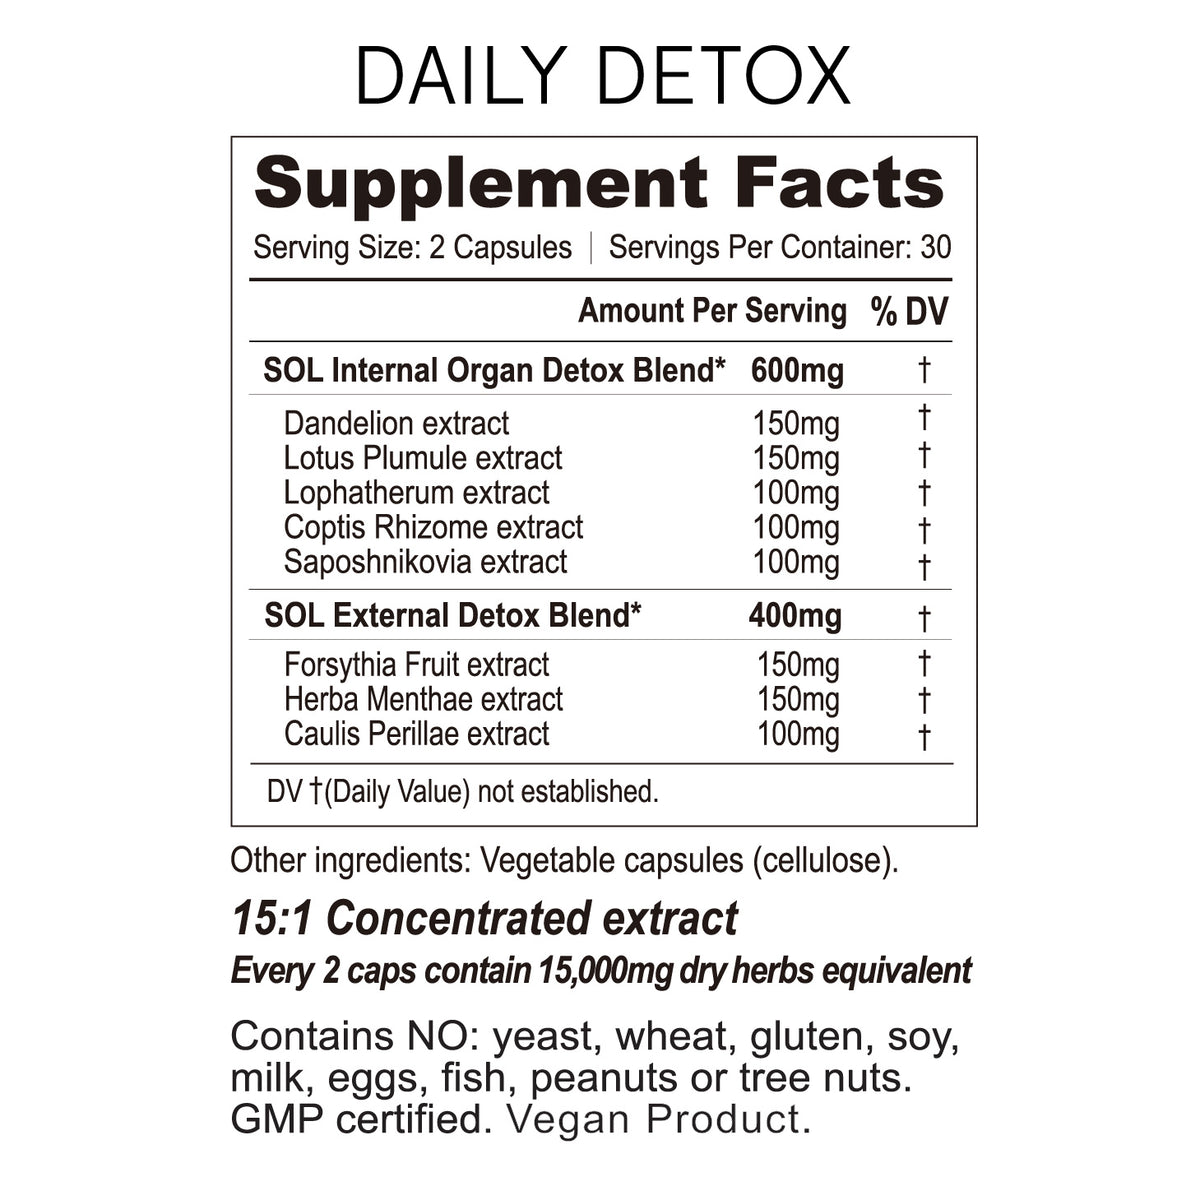 Daily Detox supplement ingredients 